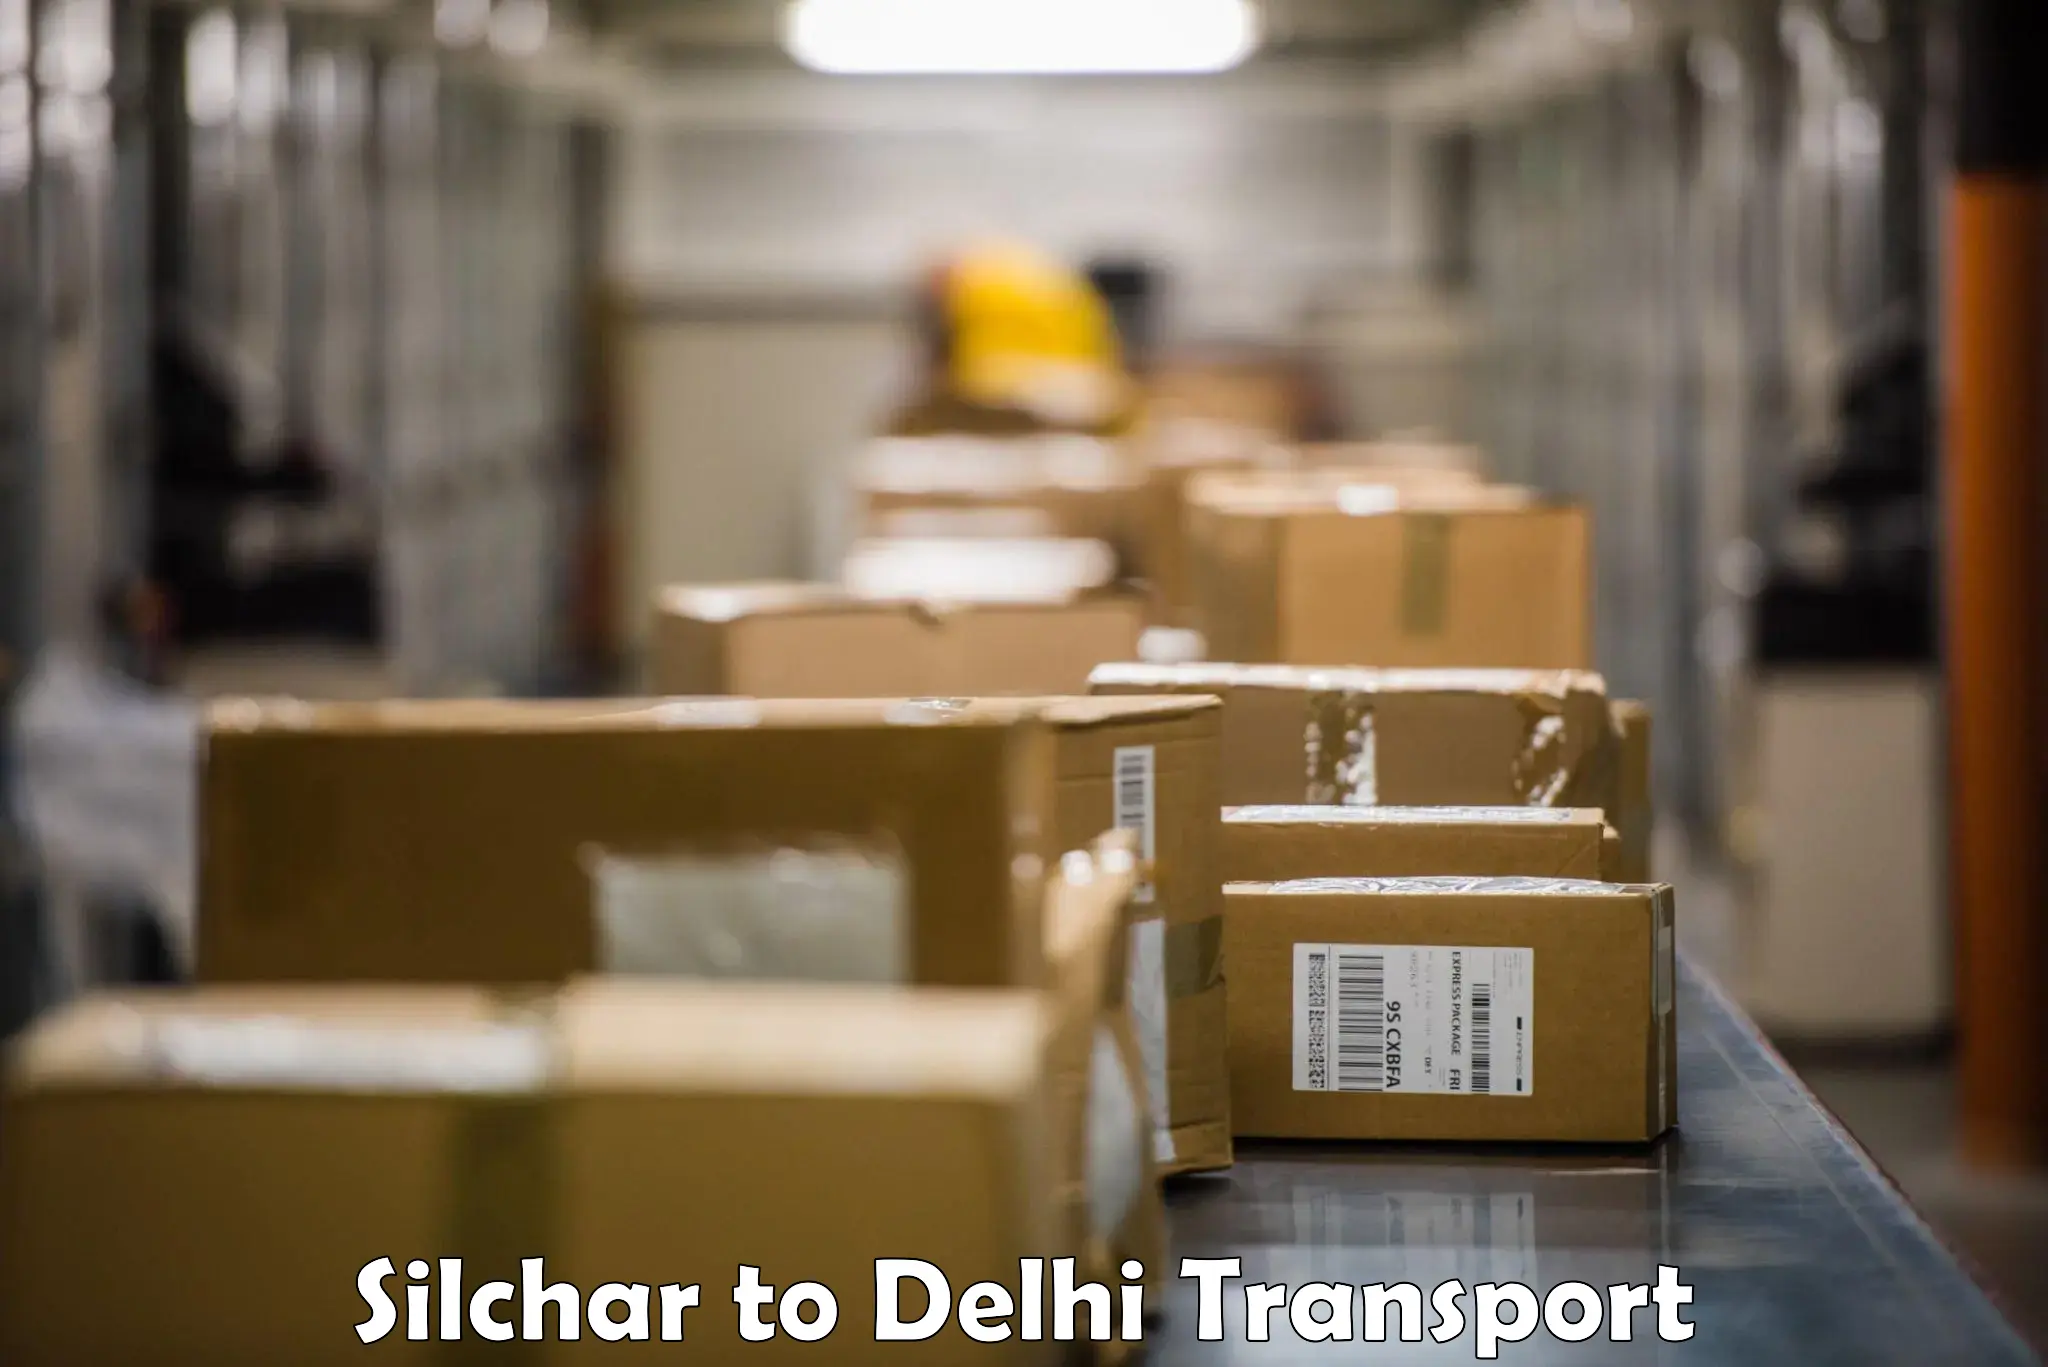 Goods delivery service Silchar to Delhi